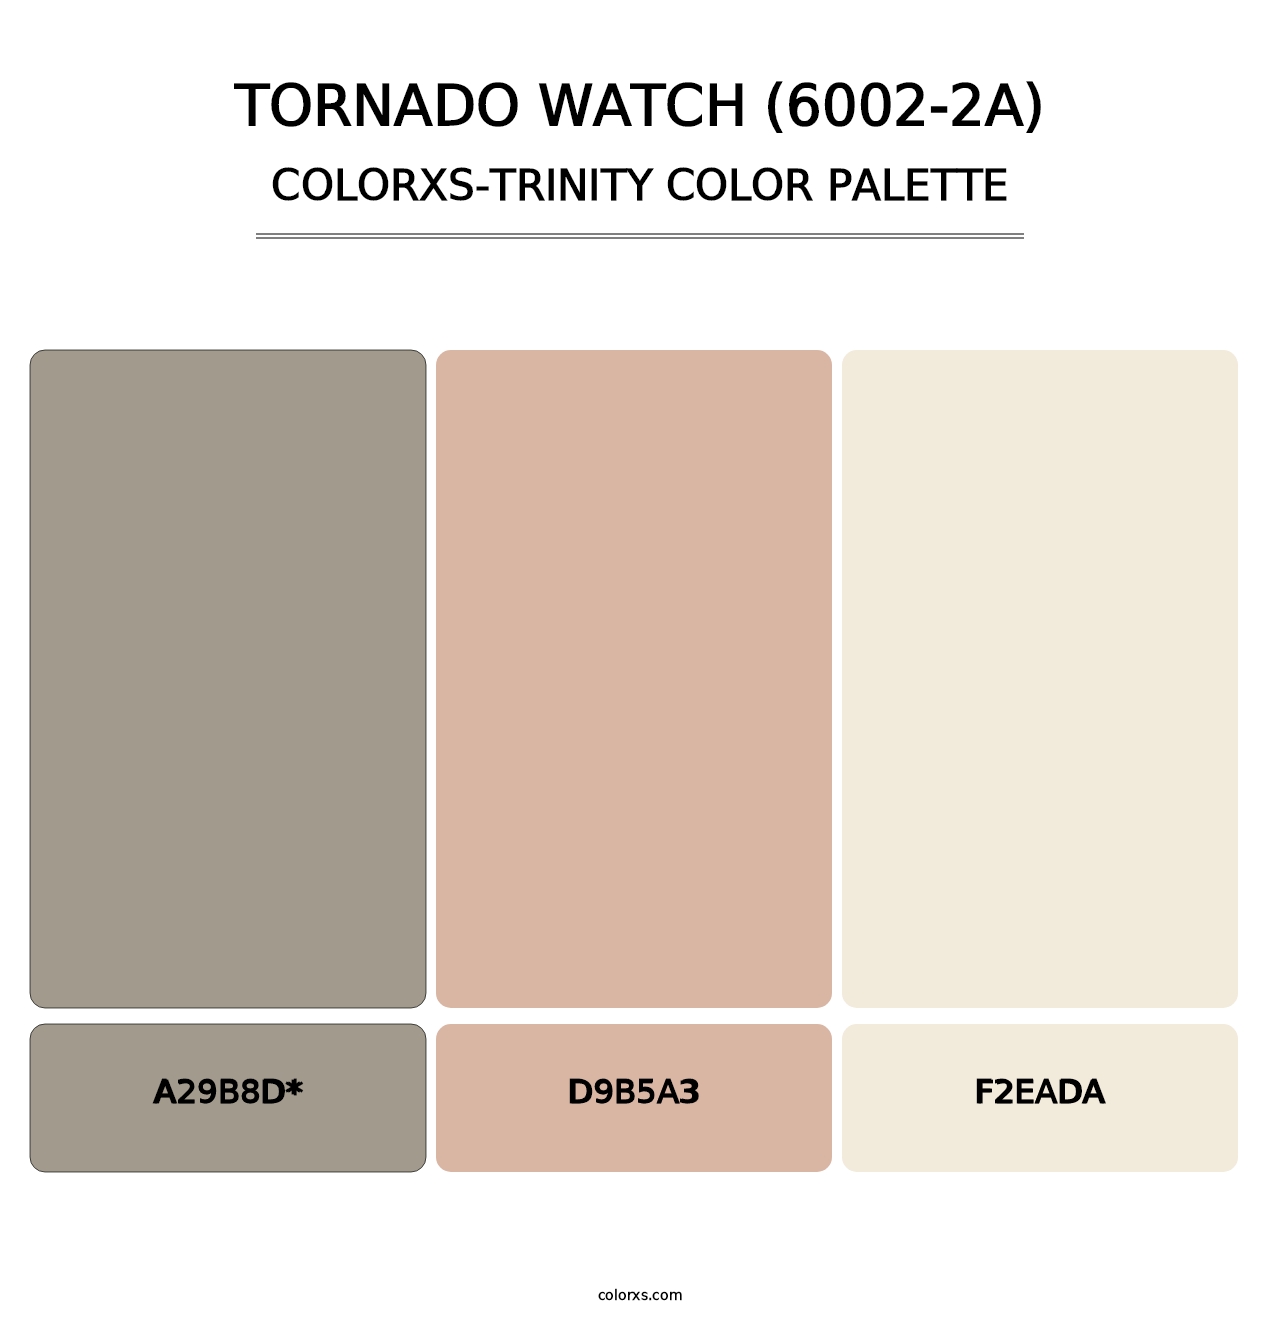 Tornado Watch (6002-2A) - Colorxs Trinity Palette